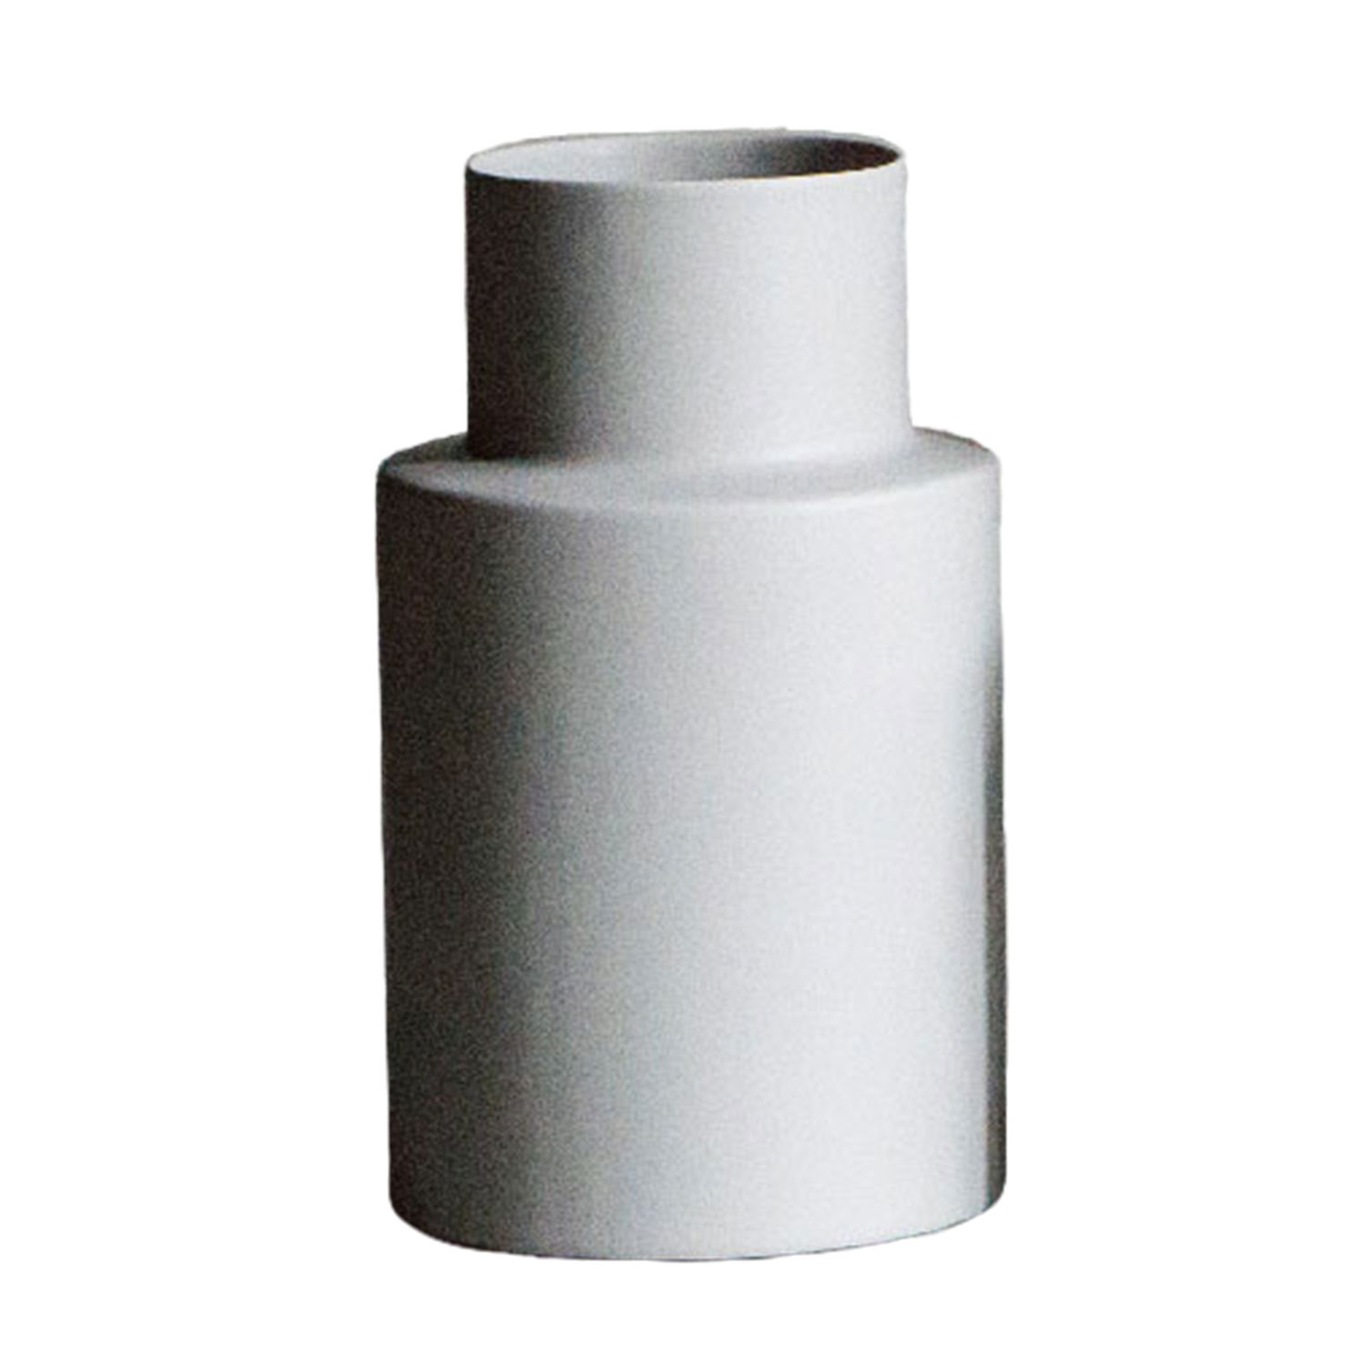 Oblong Pot/Vase Small, Mole